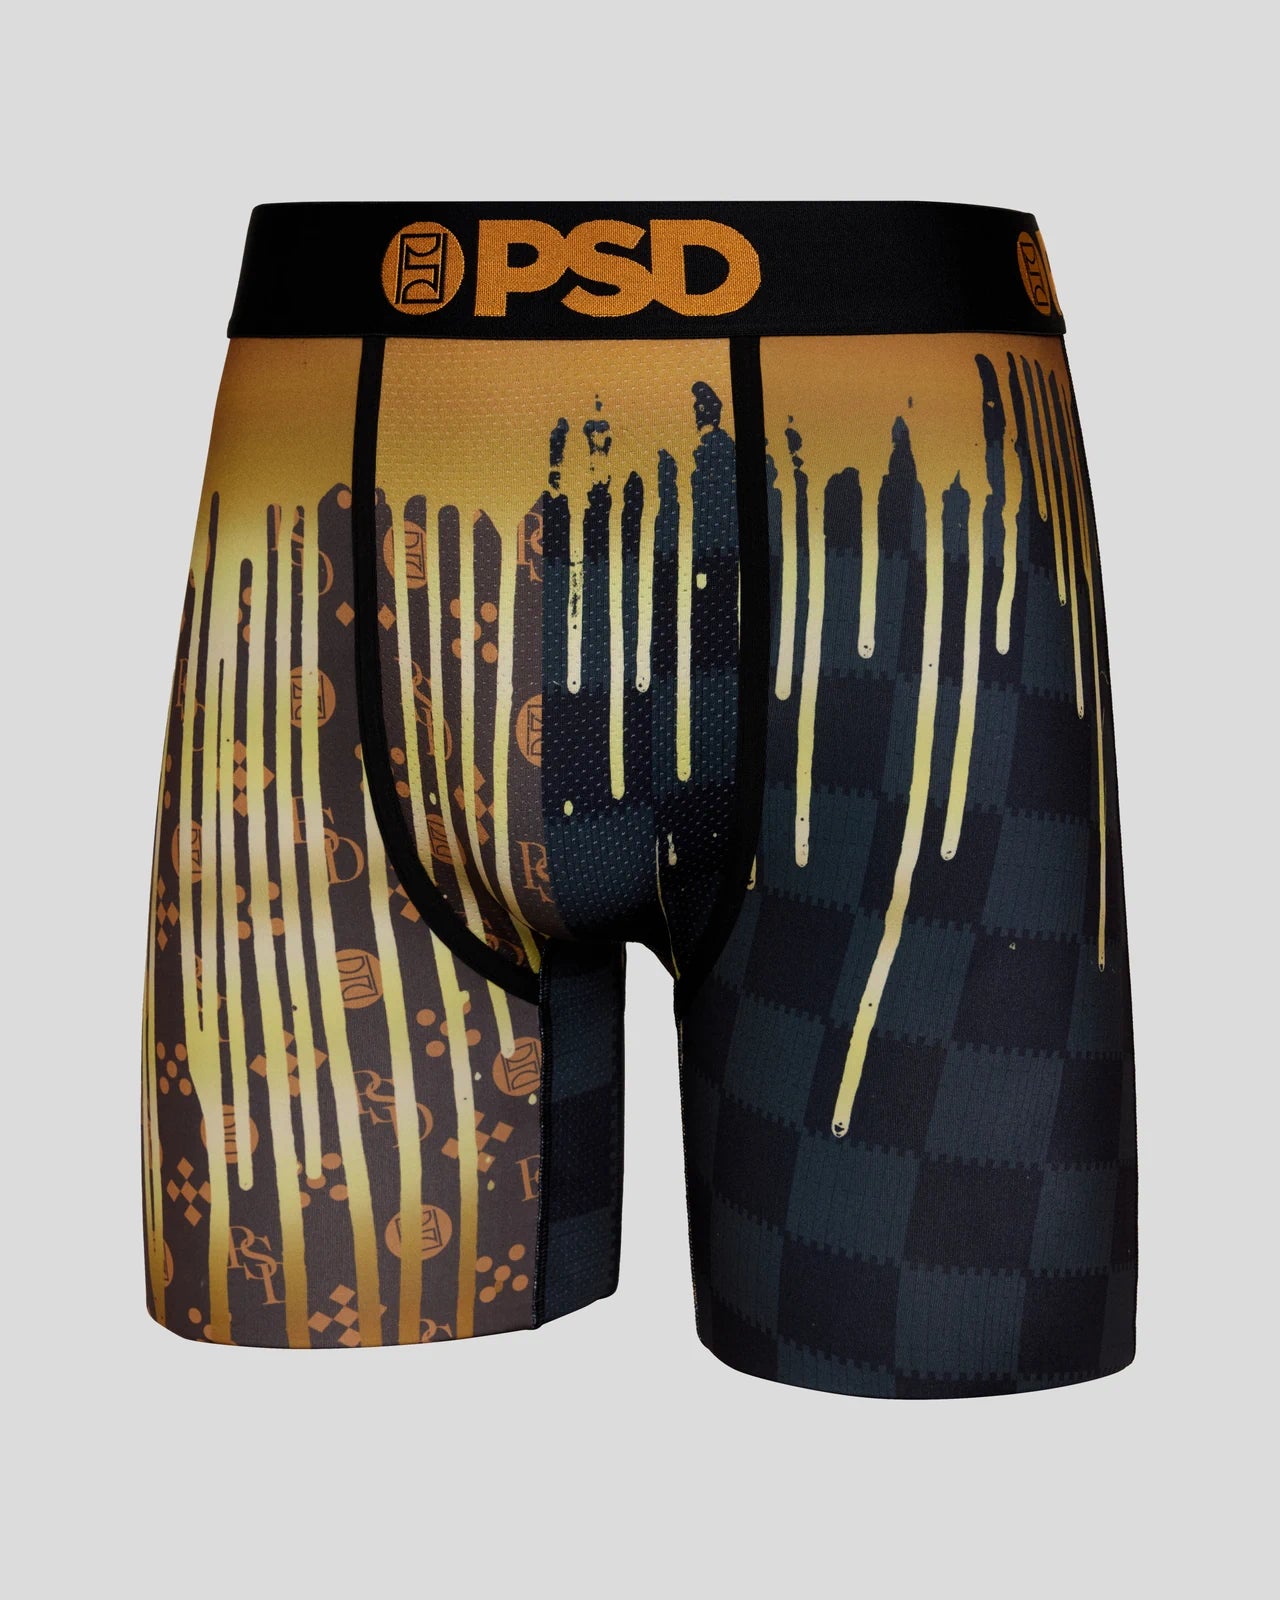 PSD Mens Boxer Briefs Trojan Magnum Pack Size MEDIUM (32 to 34